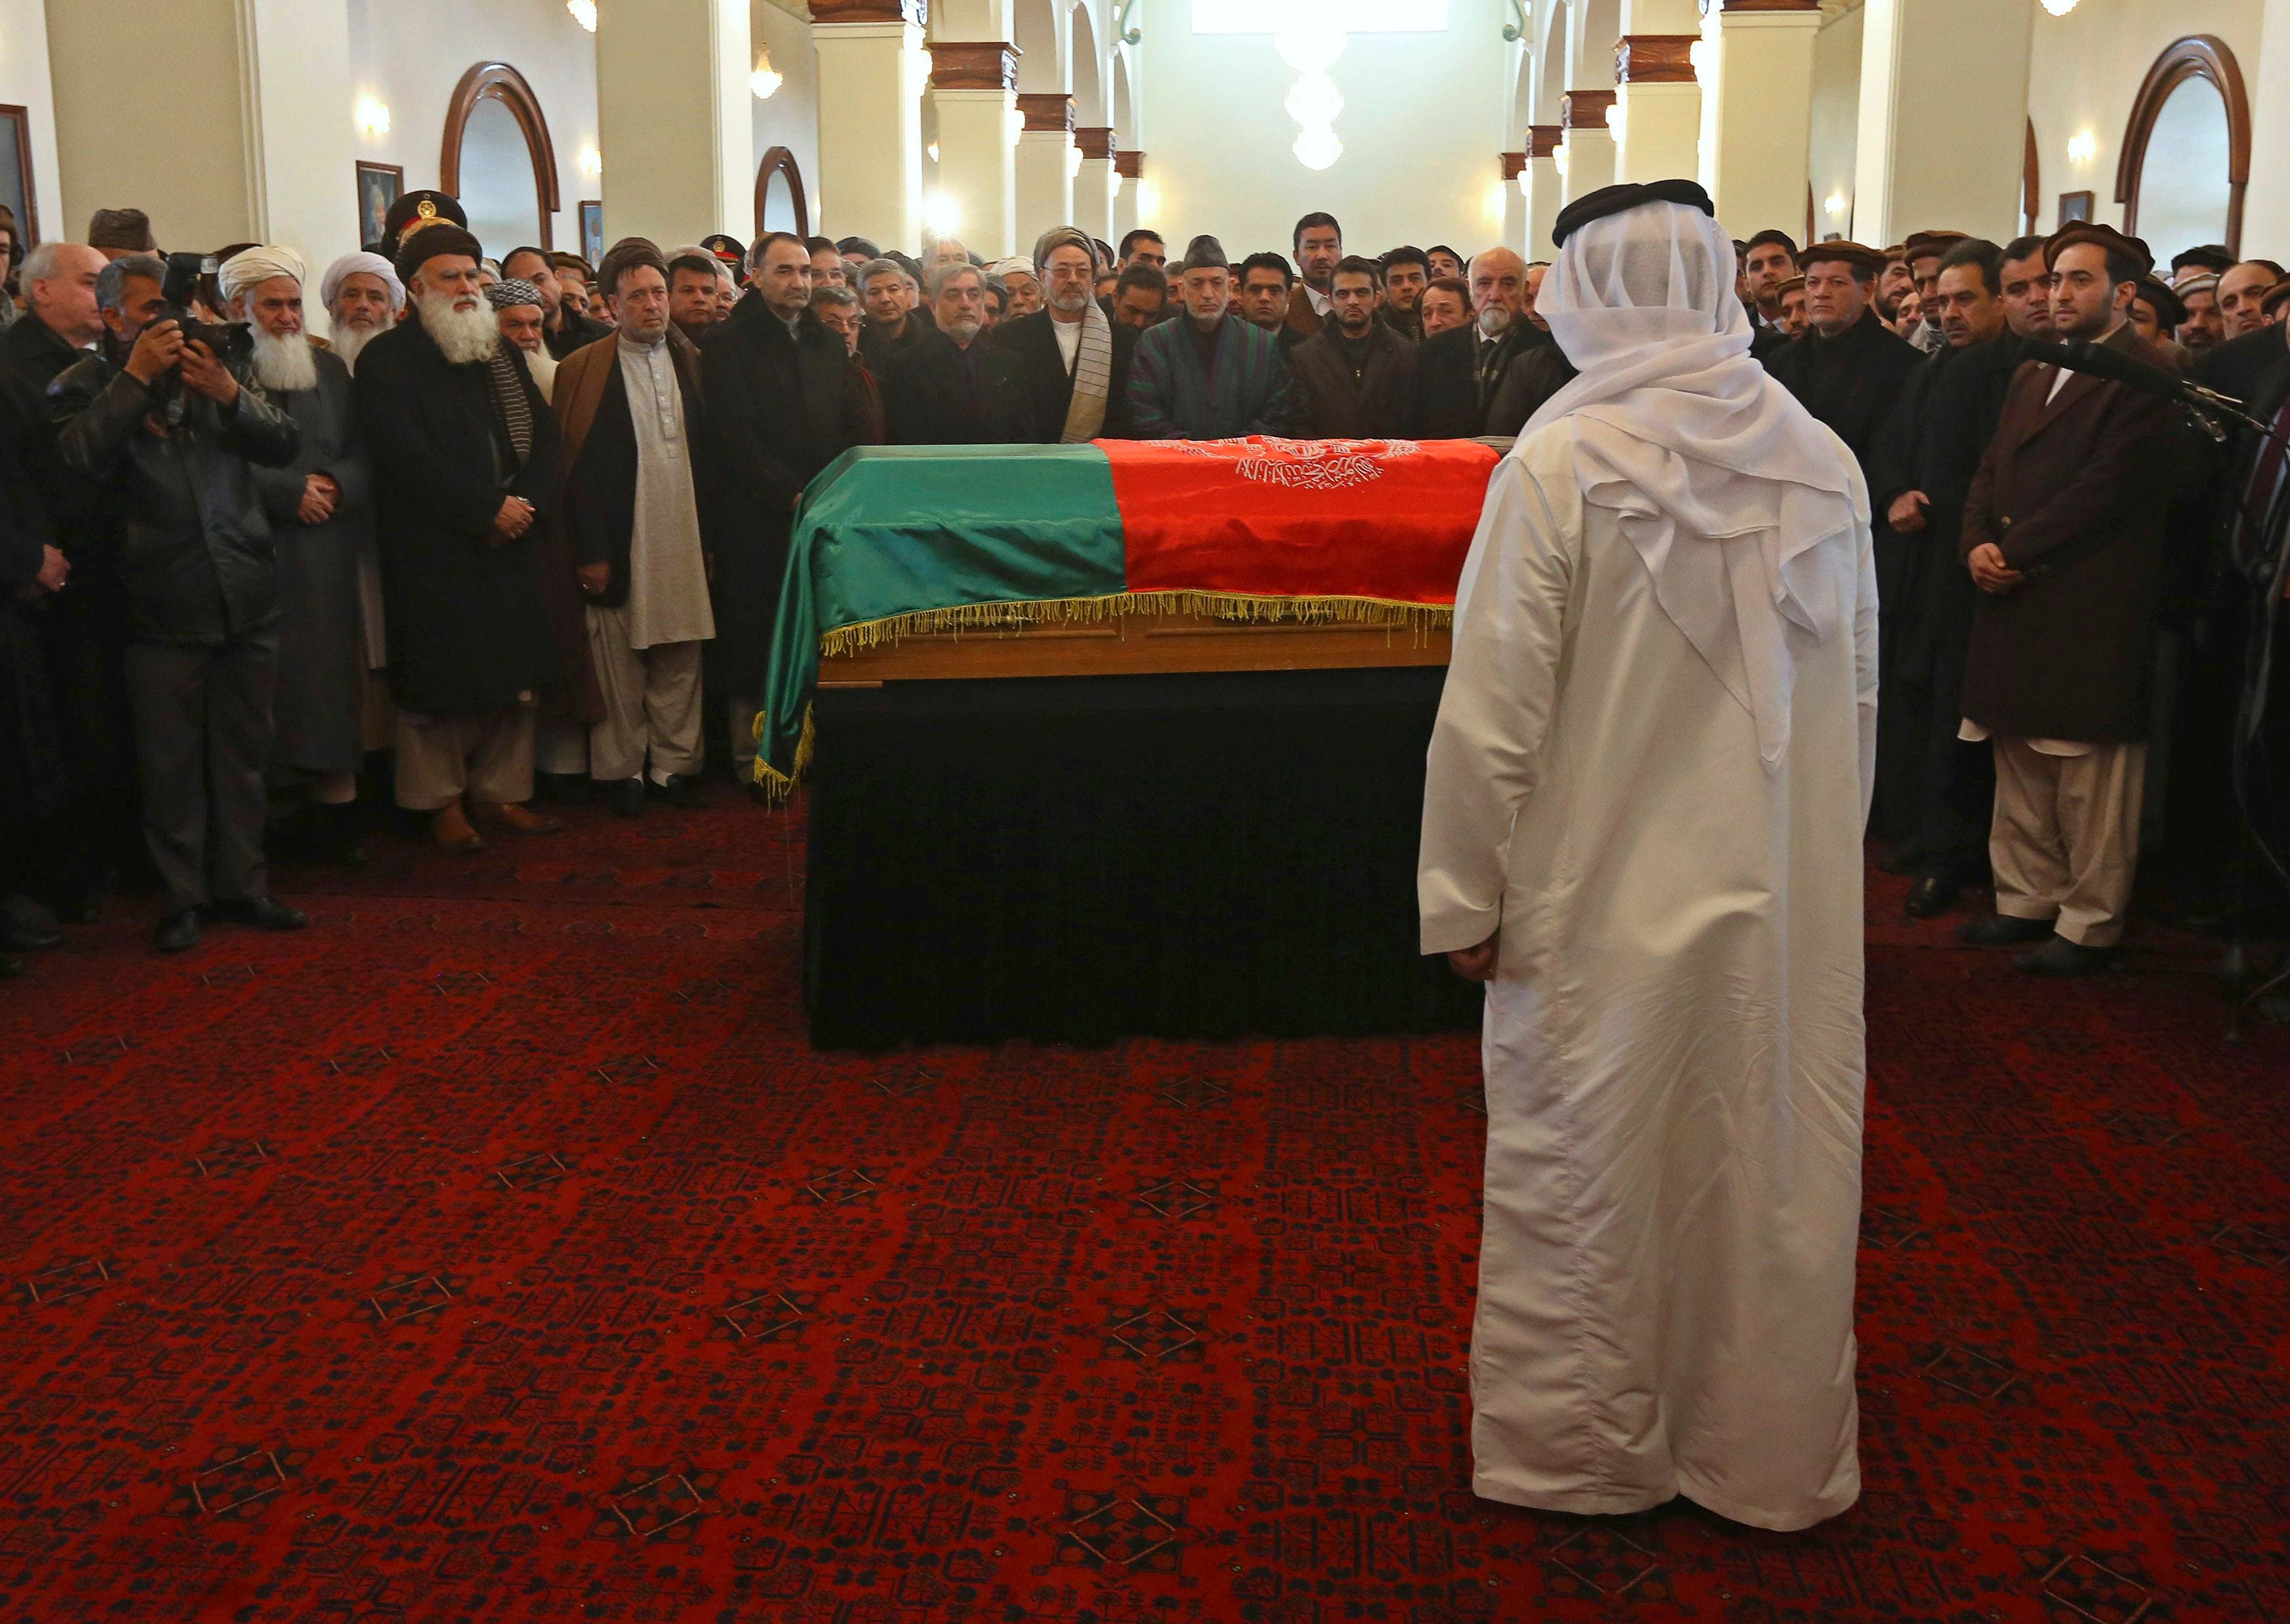 Afghans bid farewell to Vice President 